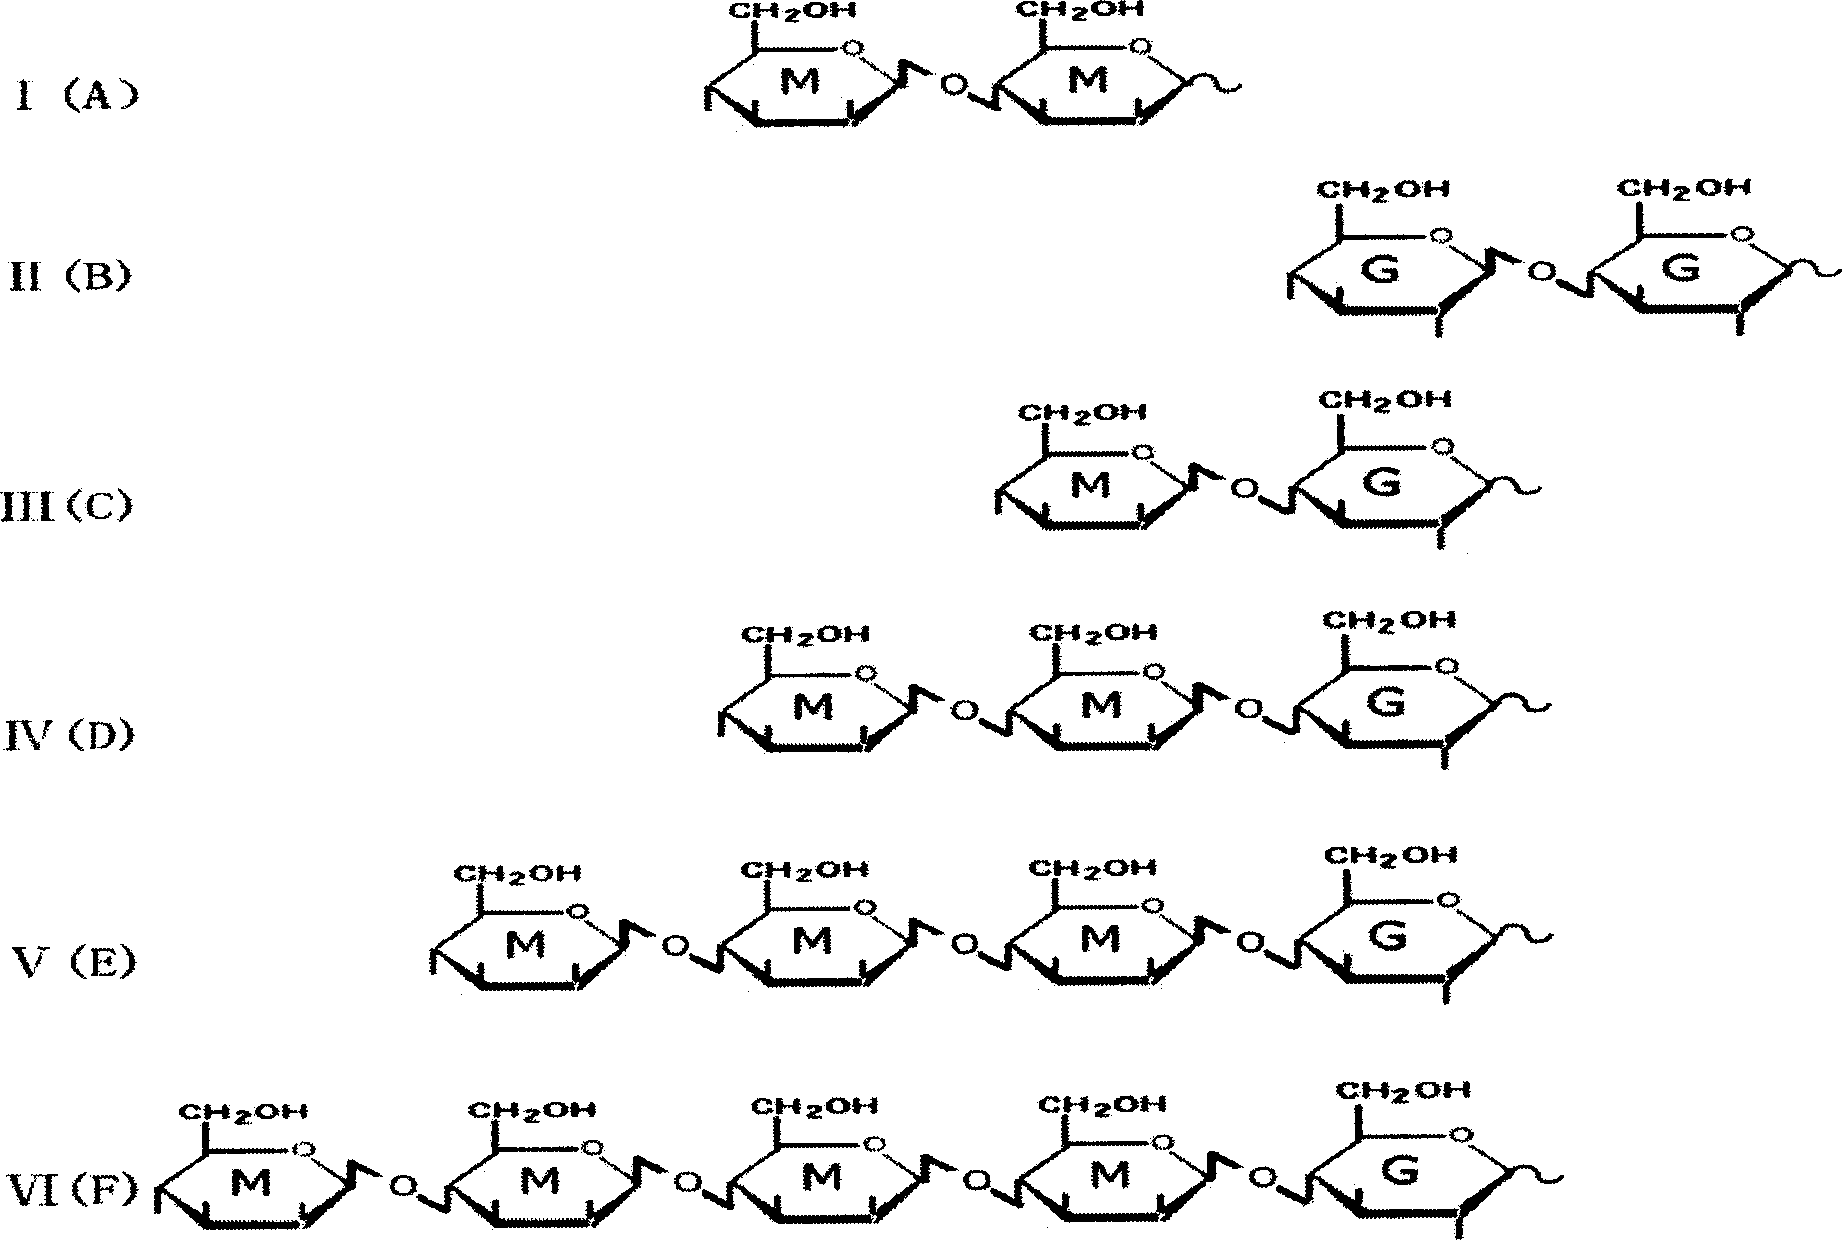 Production method of konjak mannose using cellulase